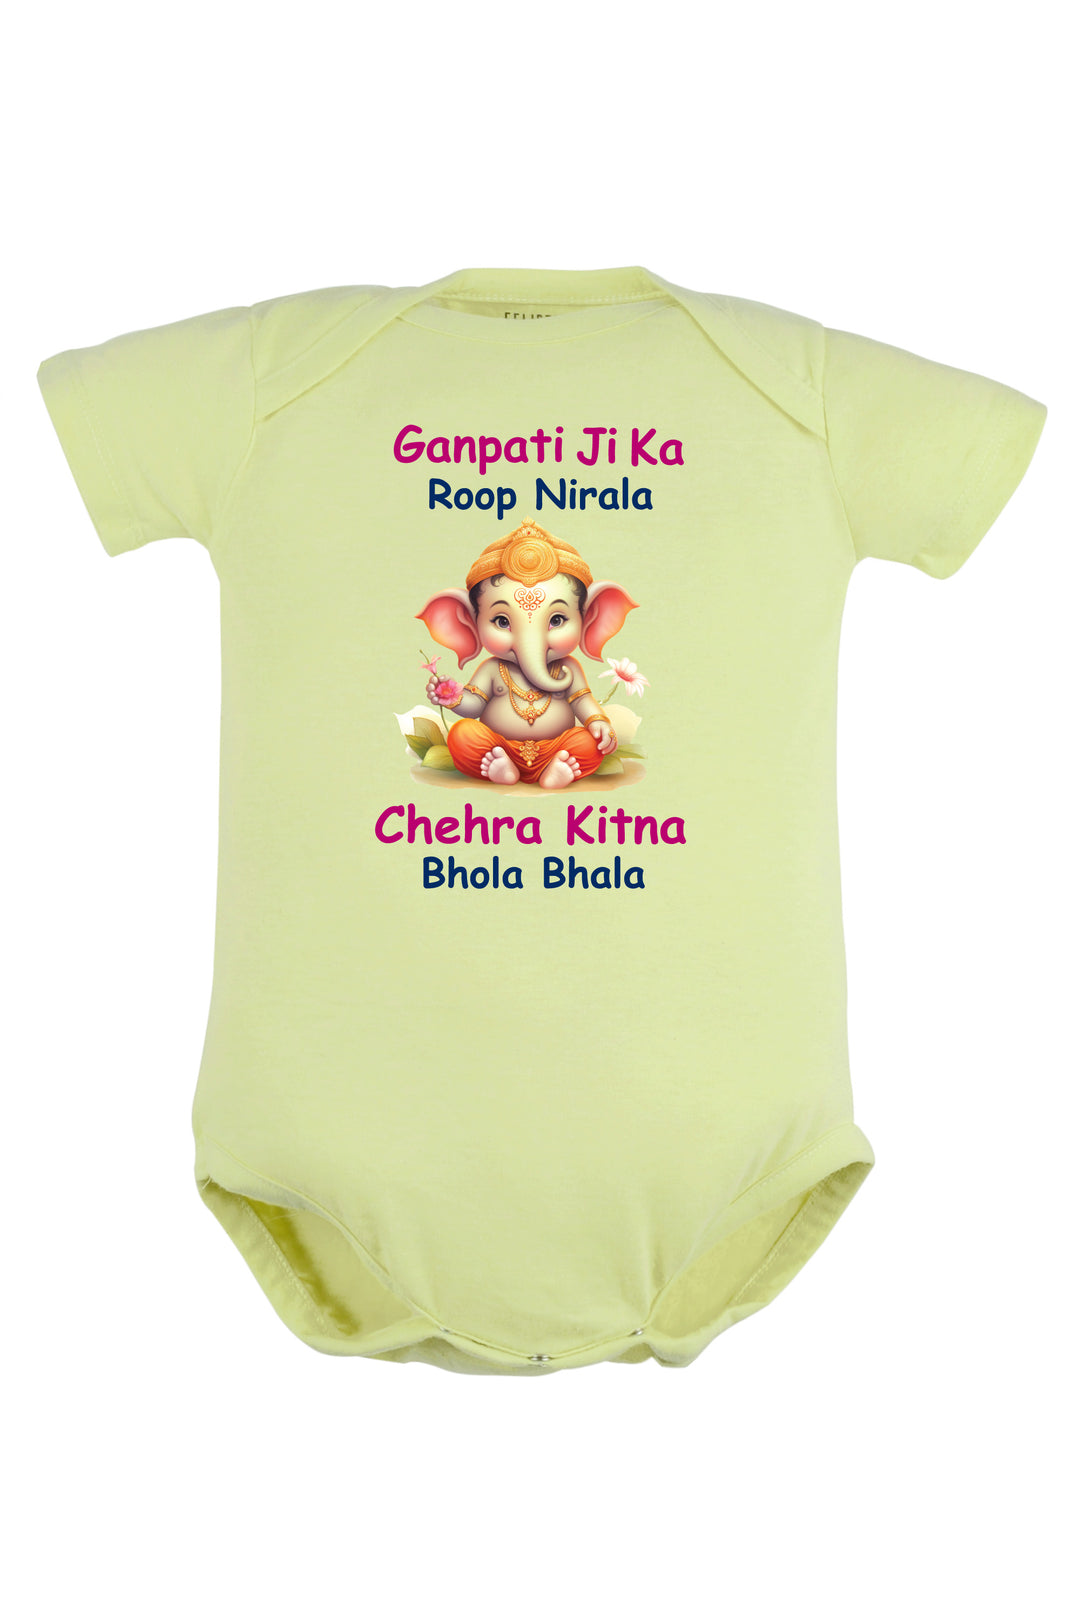 Ganpati Ji Roop Nirala Chehra Kitna Bhola Bhala Baby Romper | Onesies